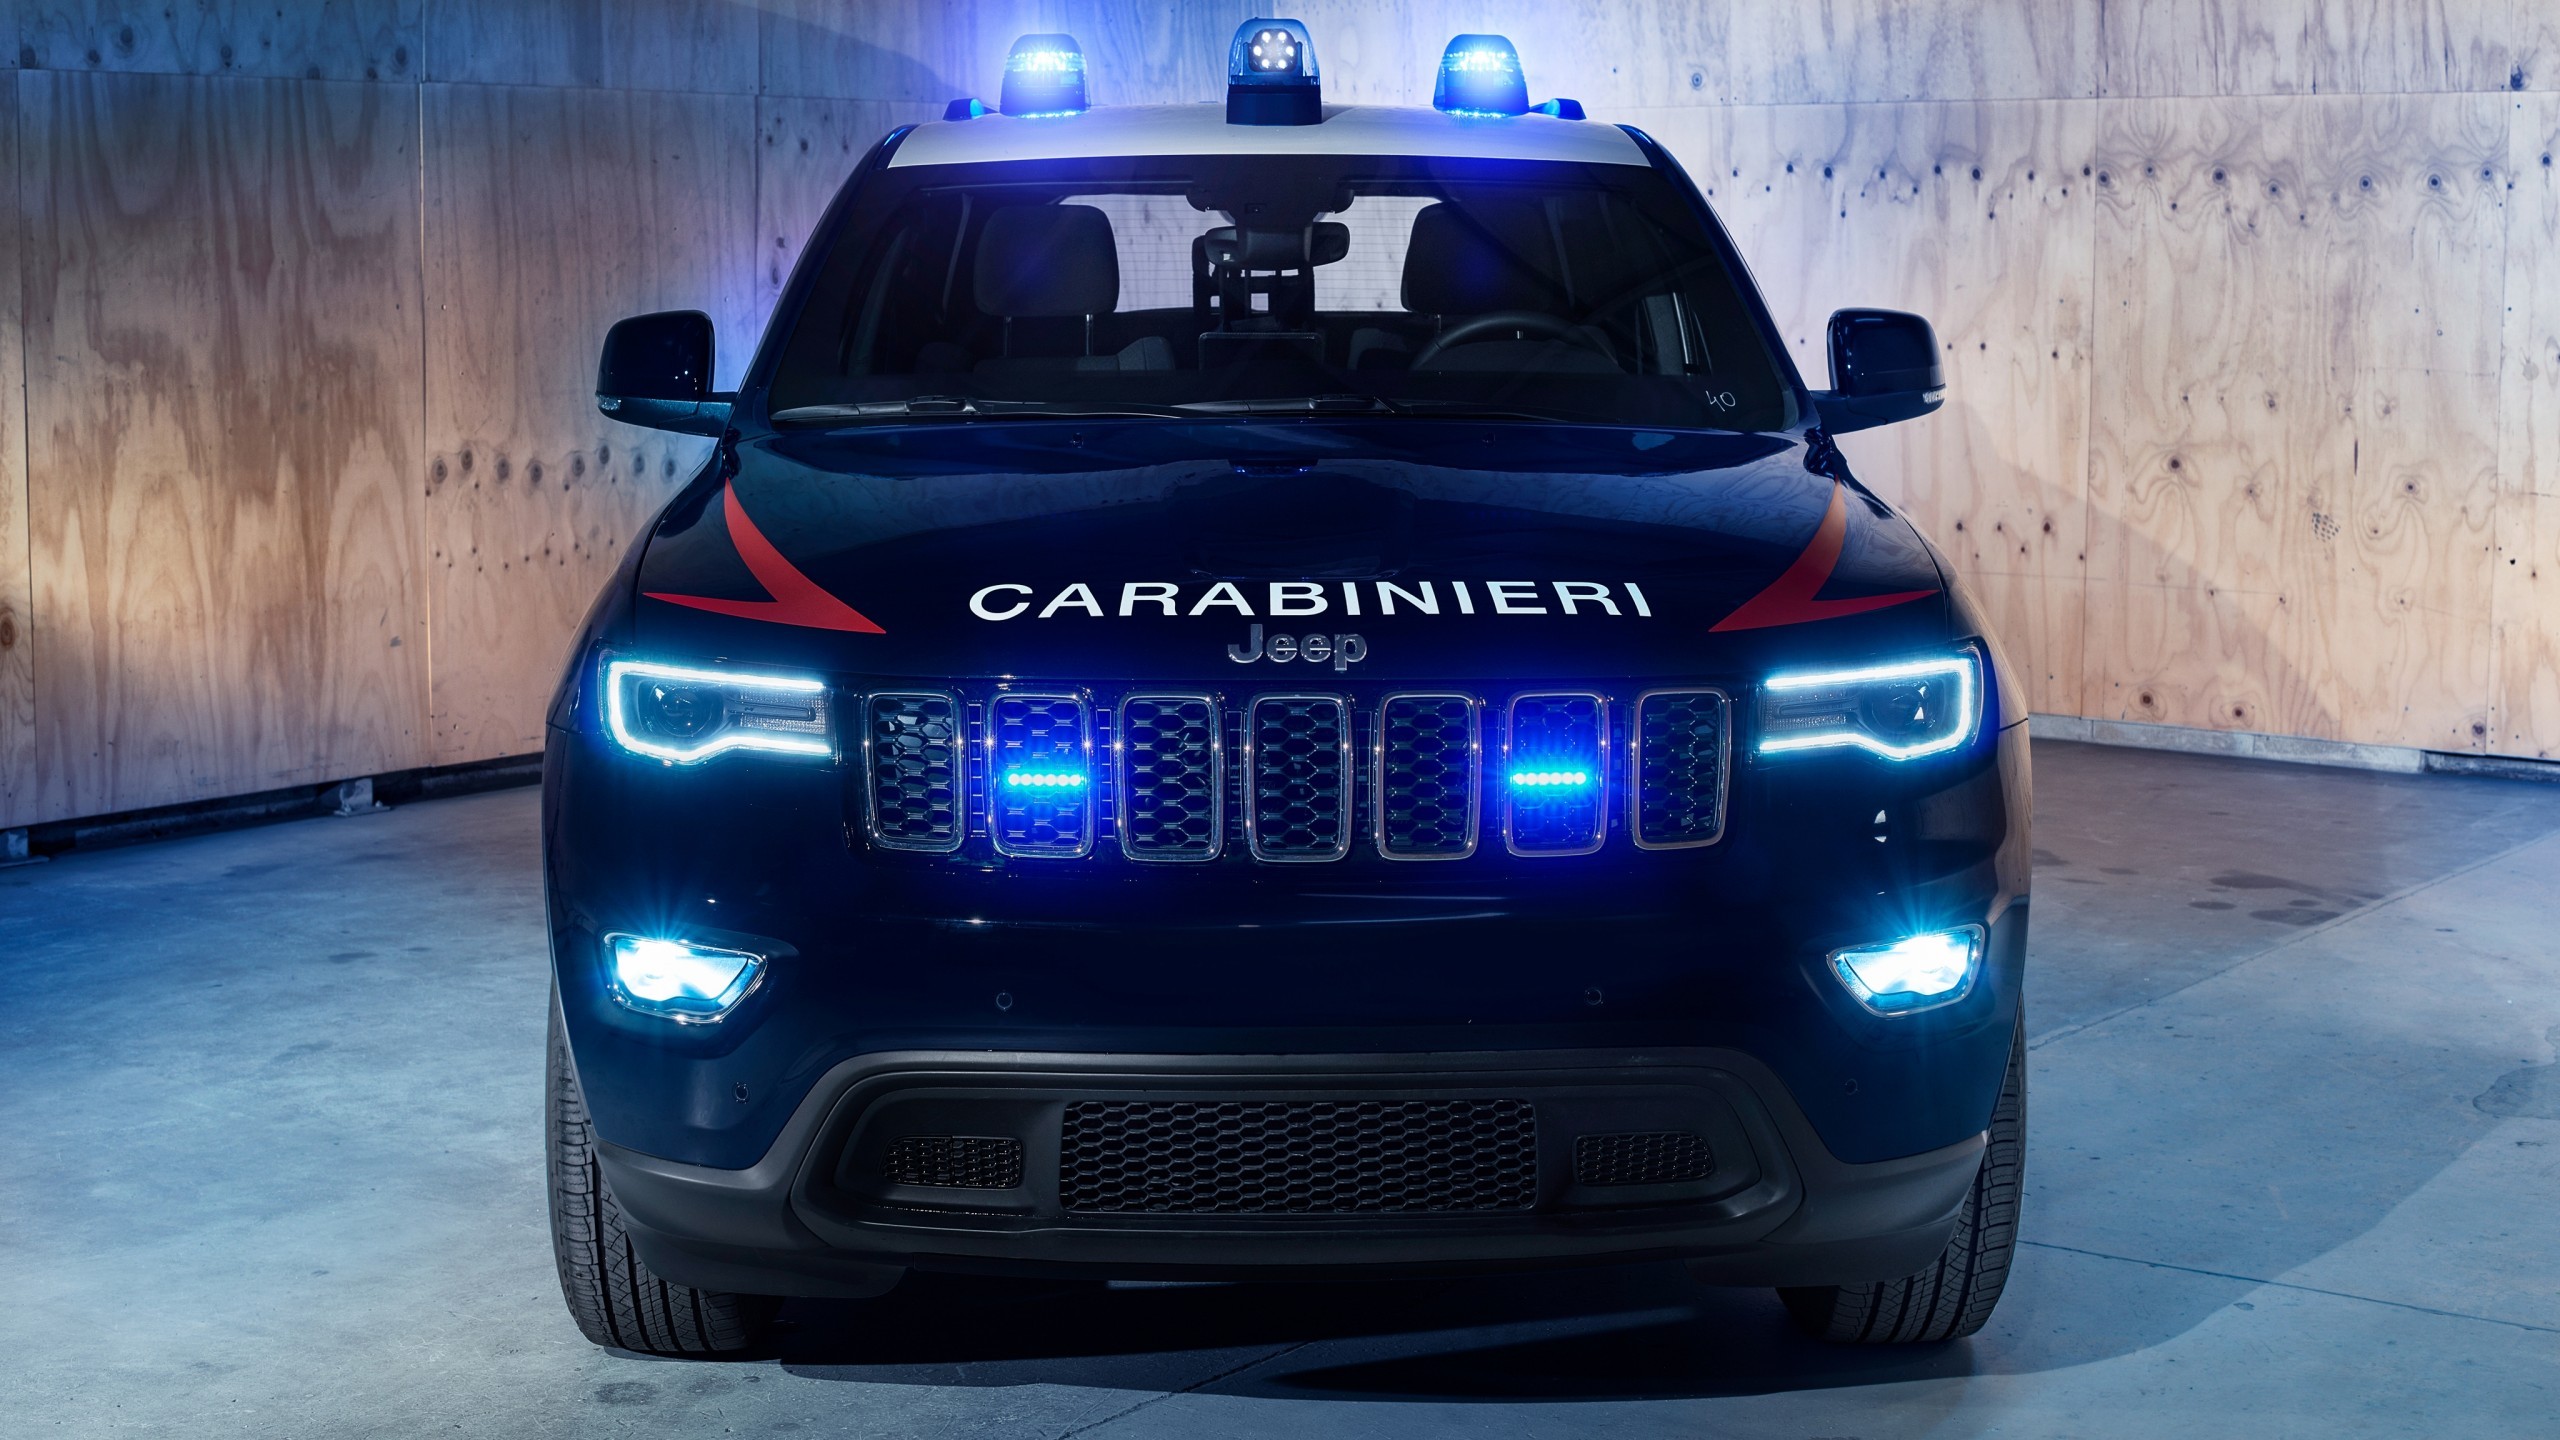 Jeep Grand Cherokee Carabinieri, Front View, Suv Police - Jeep Grand Cherokee Carabinieri - HD Wallpaper 